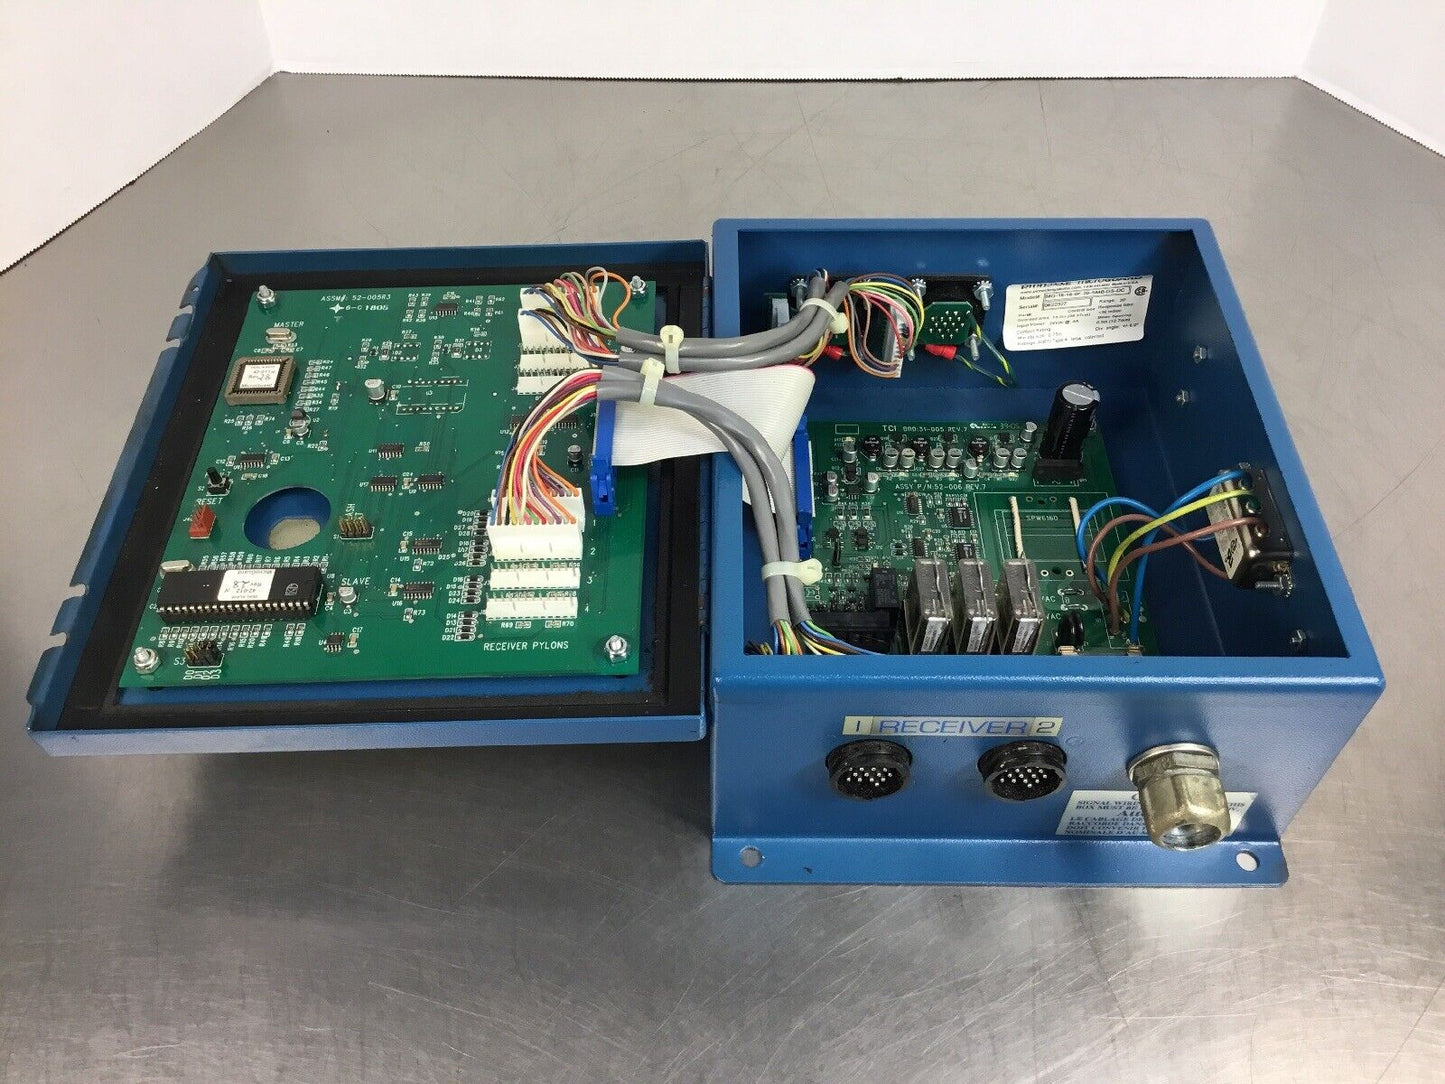 Pinnacle Microguard Control Box Controller MG-16-16-0F-20-SMB-DS-DC     5E